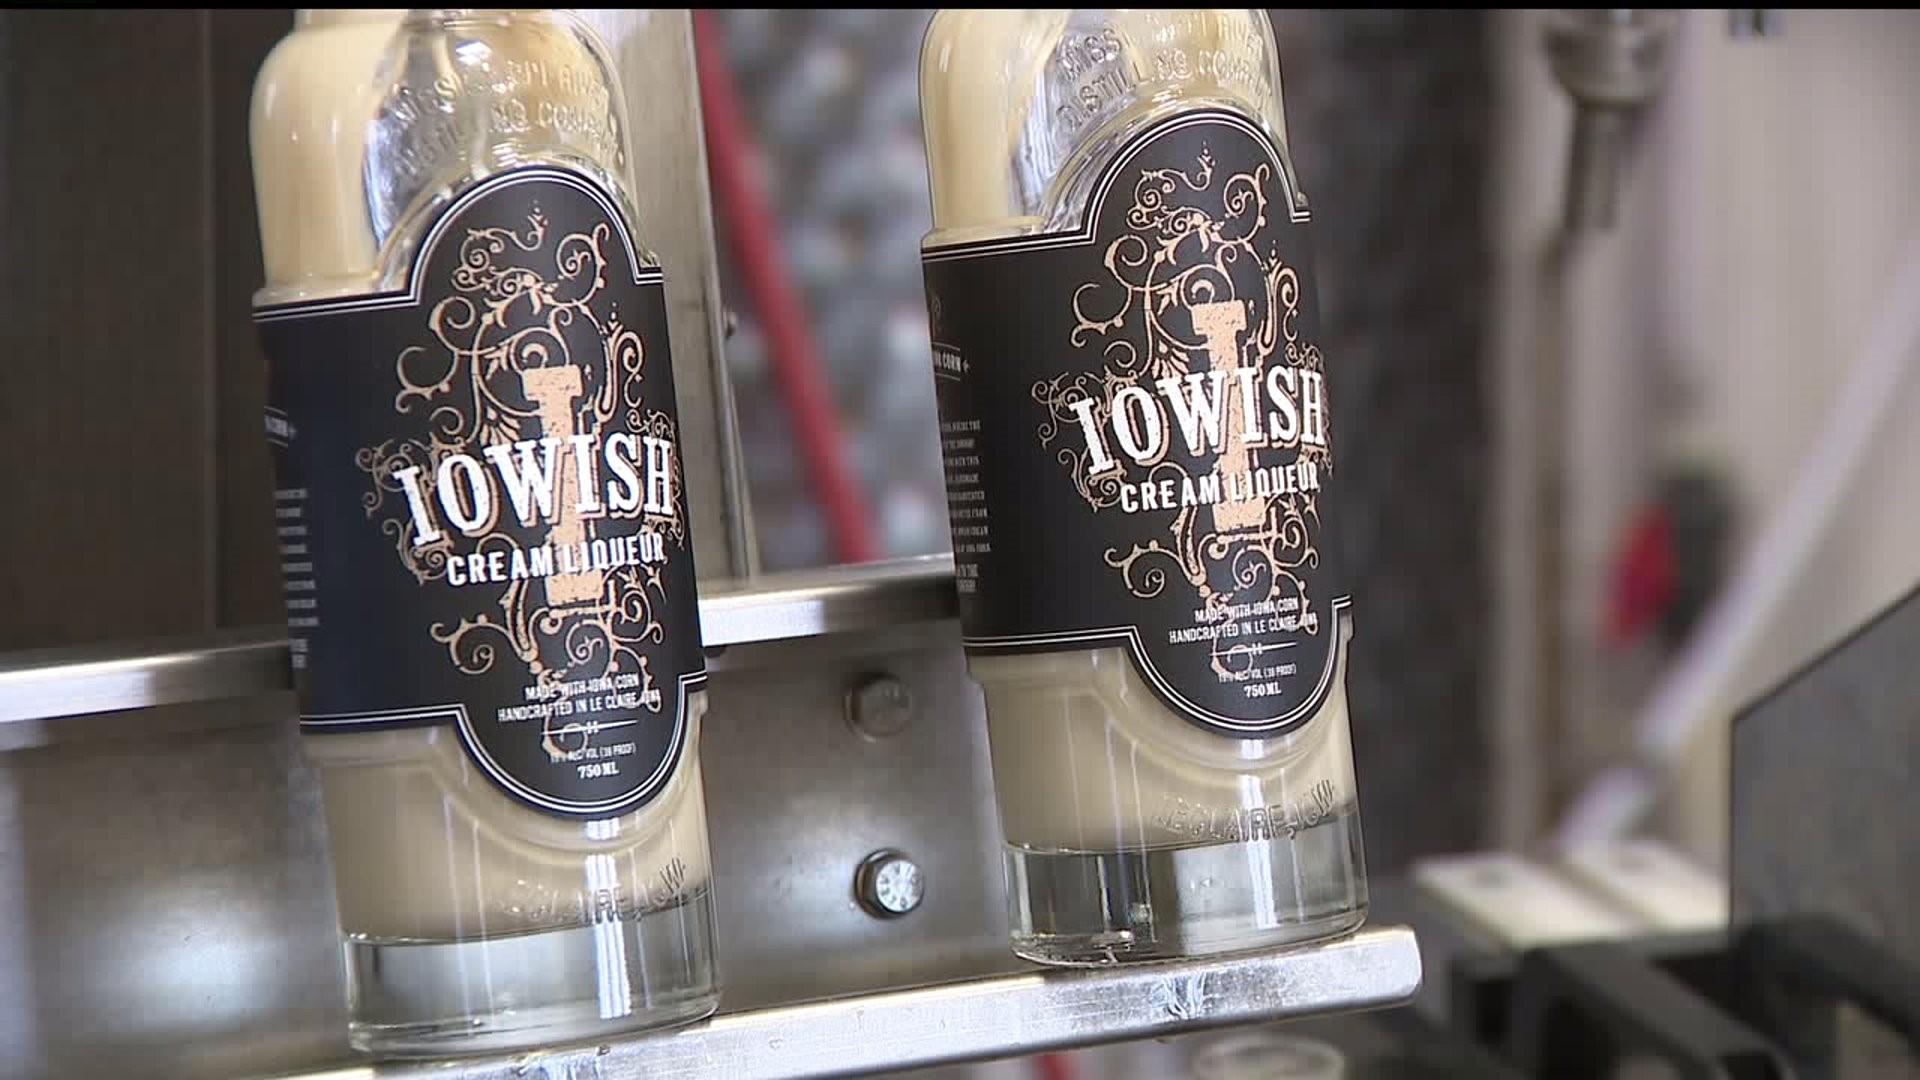 Bill aimed at making sales easier for Iowa distilleries in Iowa